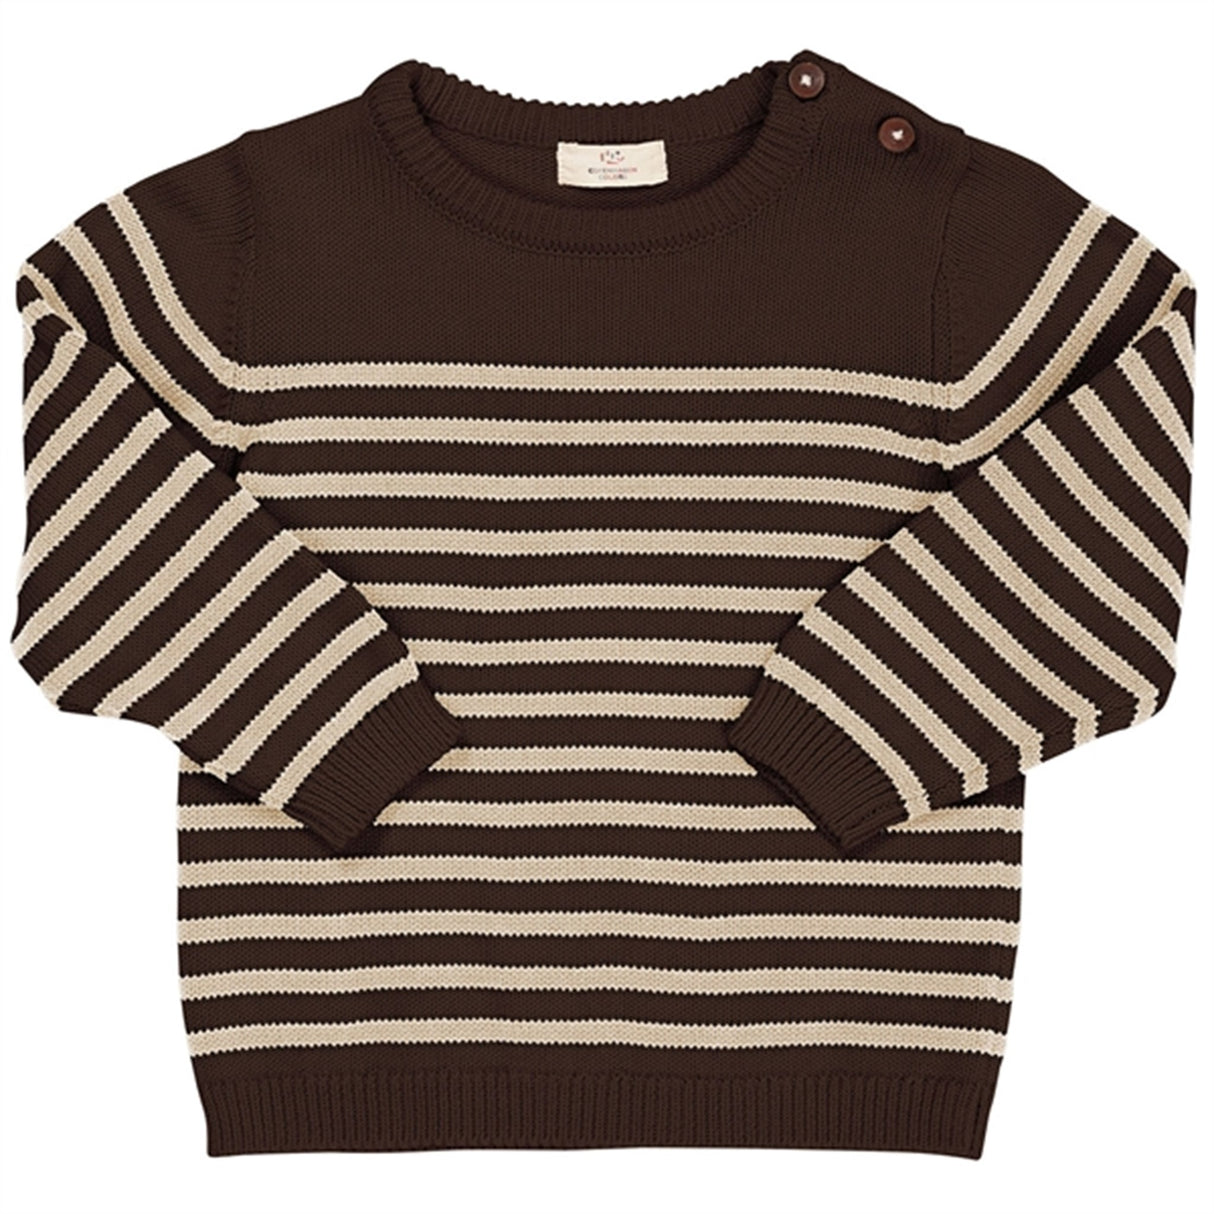 Copenhagen Colors Dk Brown Cream Combi Knitted Striped Sailor Sweater